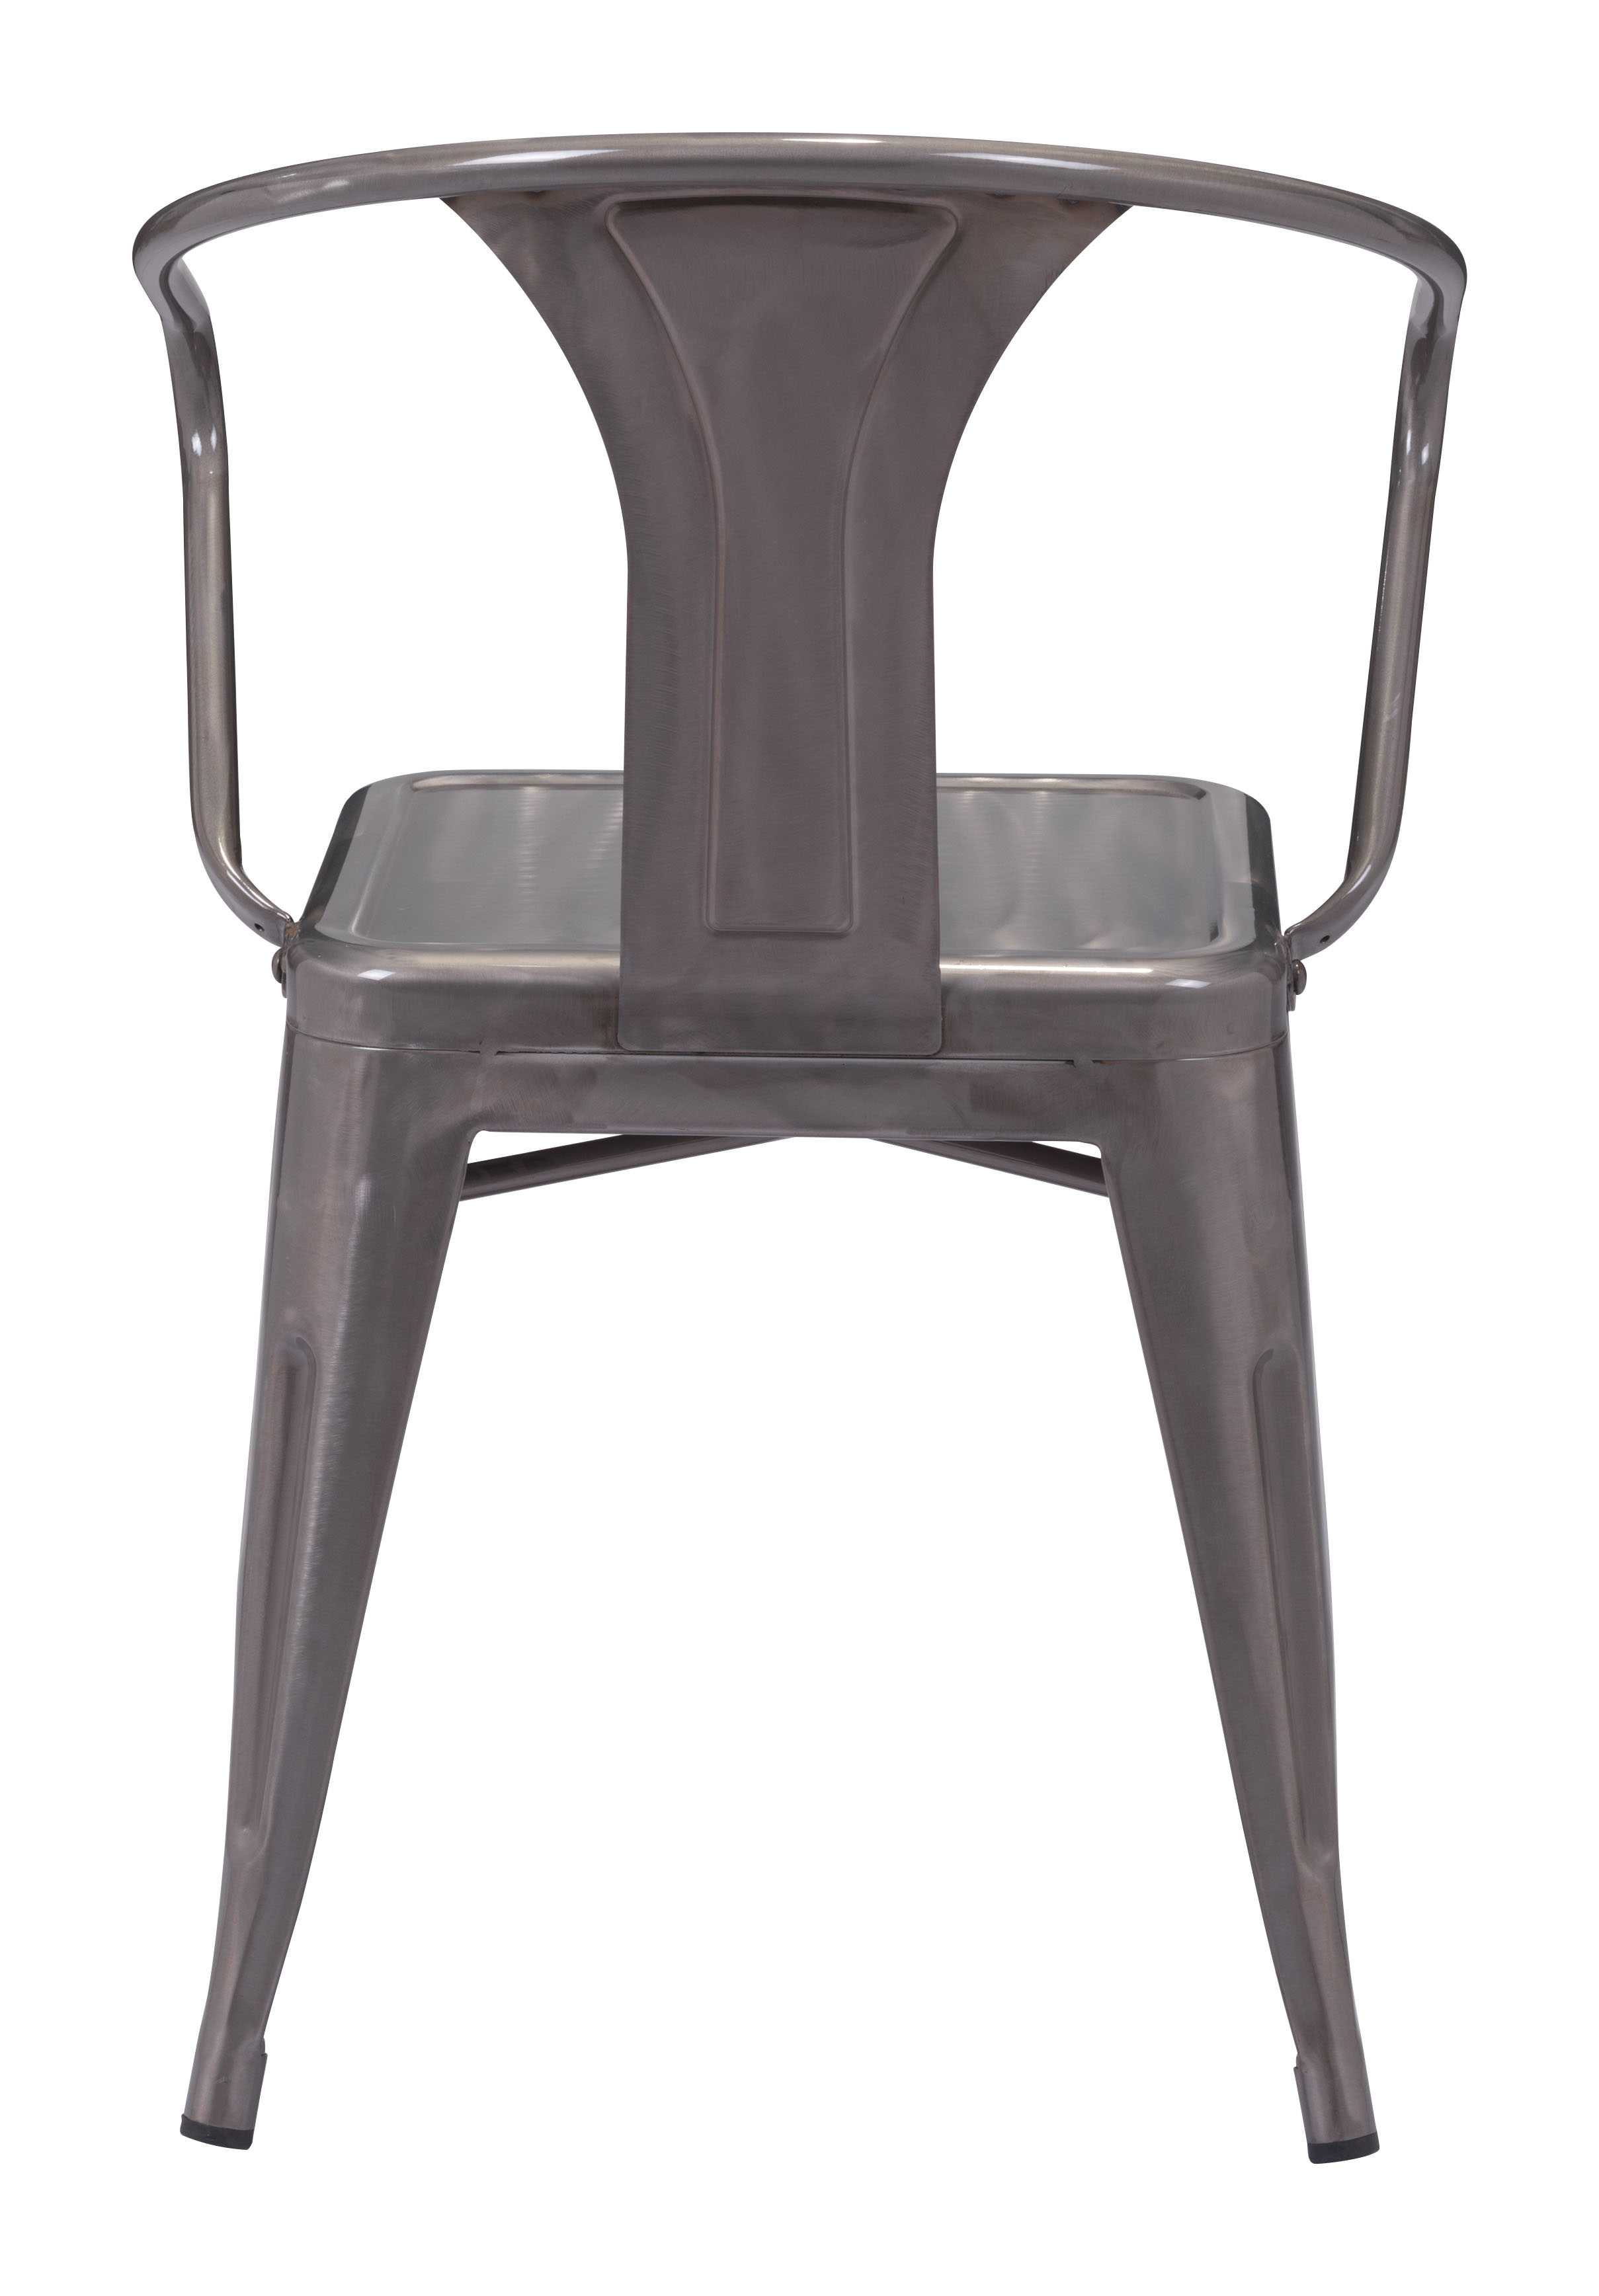 zuo-108145-helix-dining-chair-gunmetal.jpg